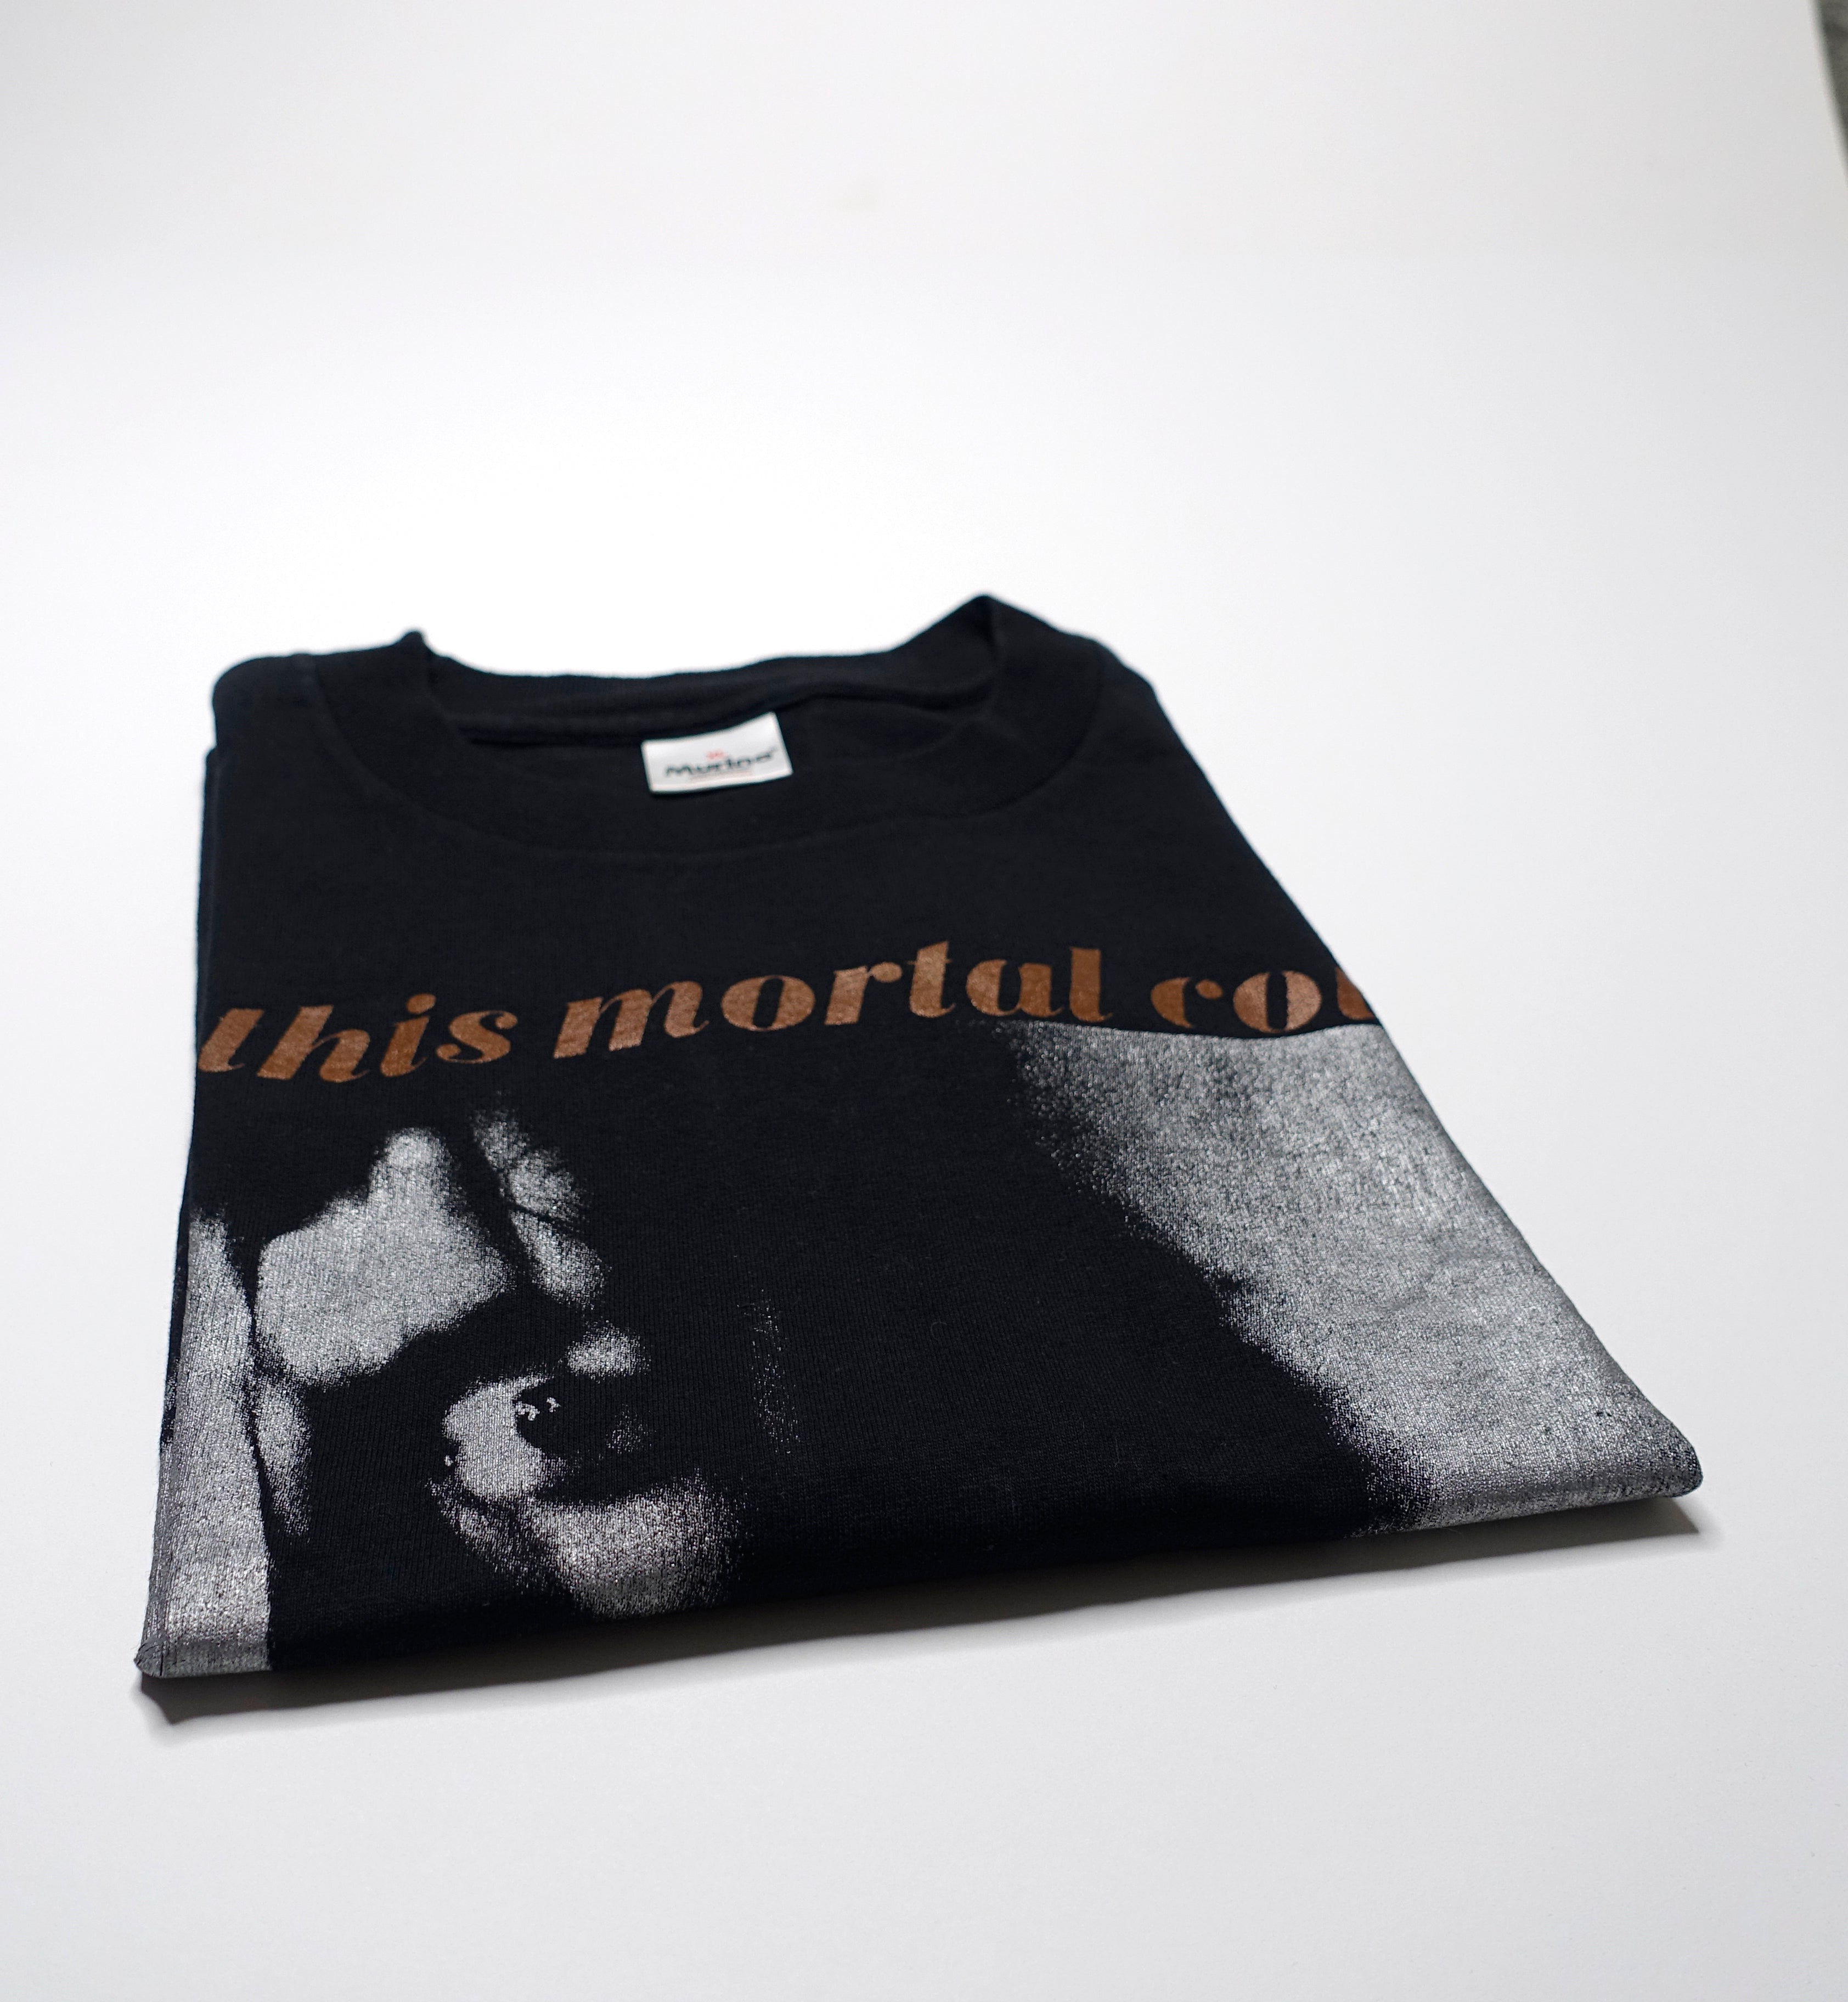 This Mortal Coil - 1983~1991 Box Set 1993 Shirt Size XL